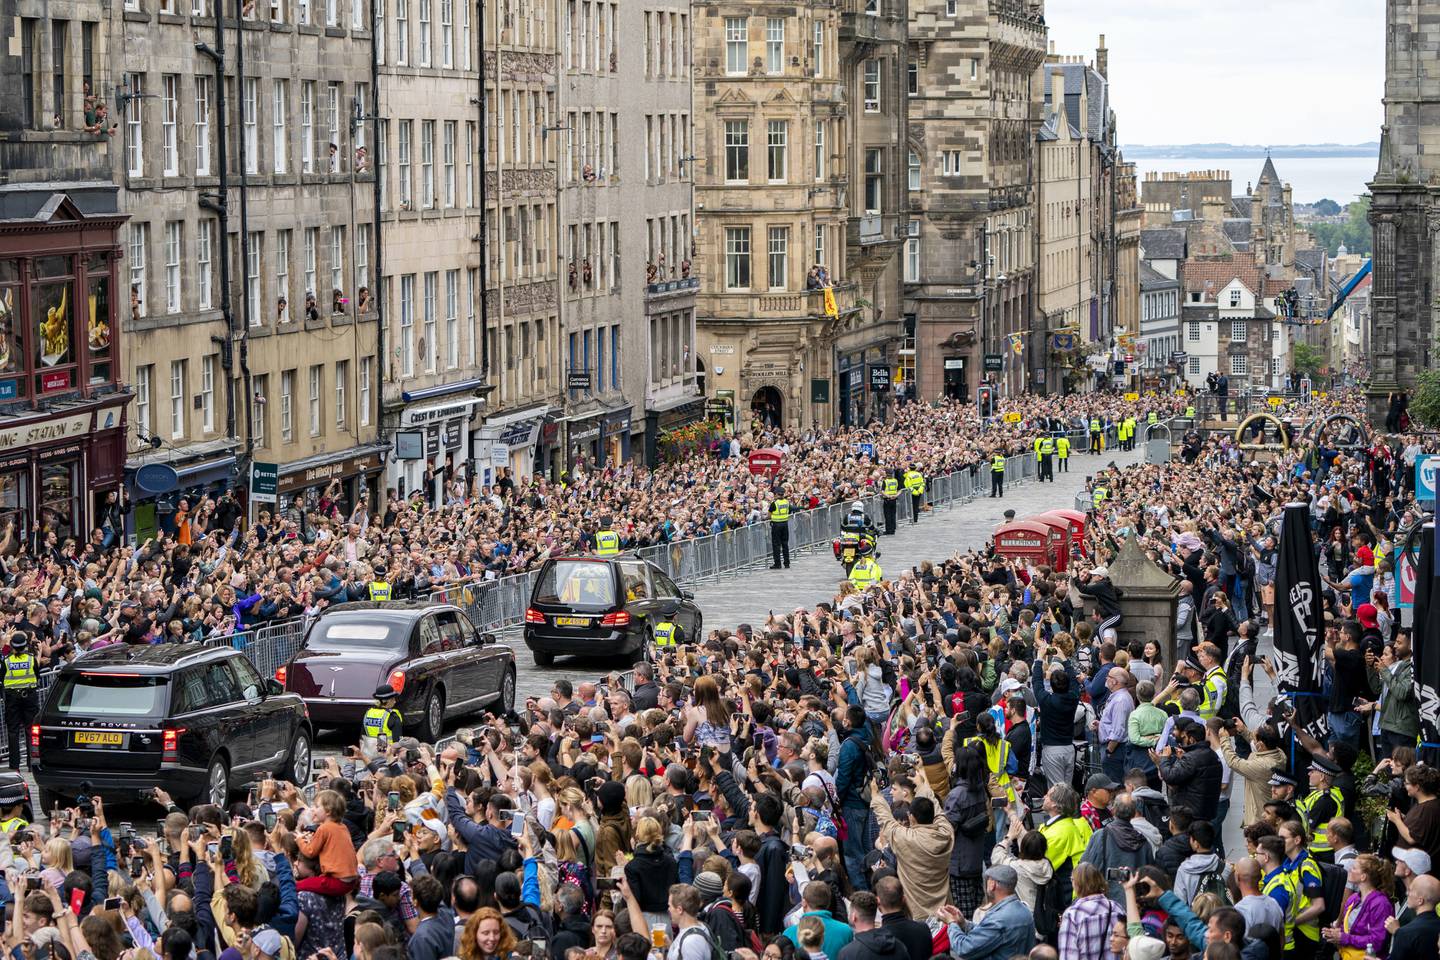 Edinburghs gater var nærmest fylt til randen av folk da kortesjen med dronning Elizabeths kiste ankom den skotske hovedstaden søndag ettermiddag. Foto: Jane Barlow / AP / NTB